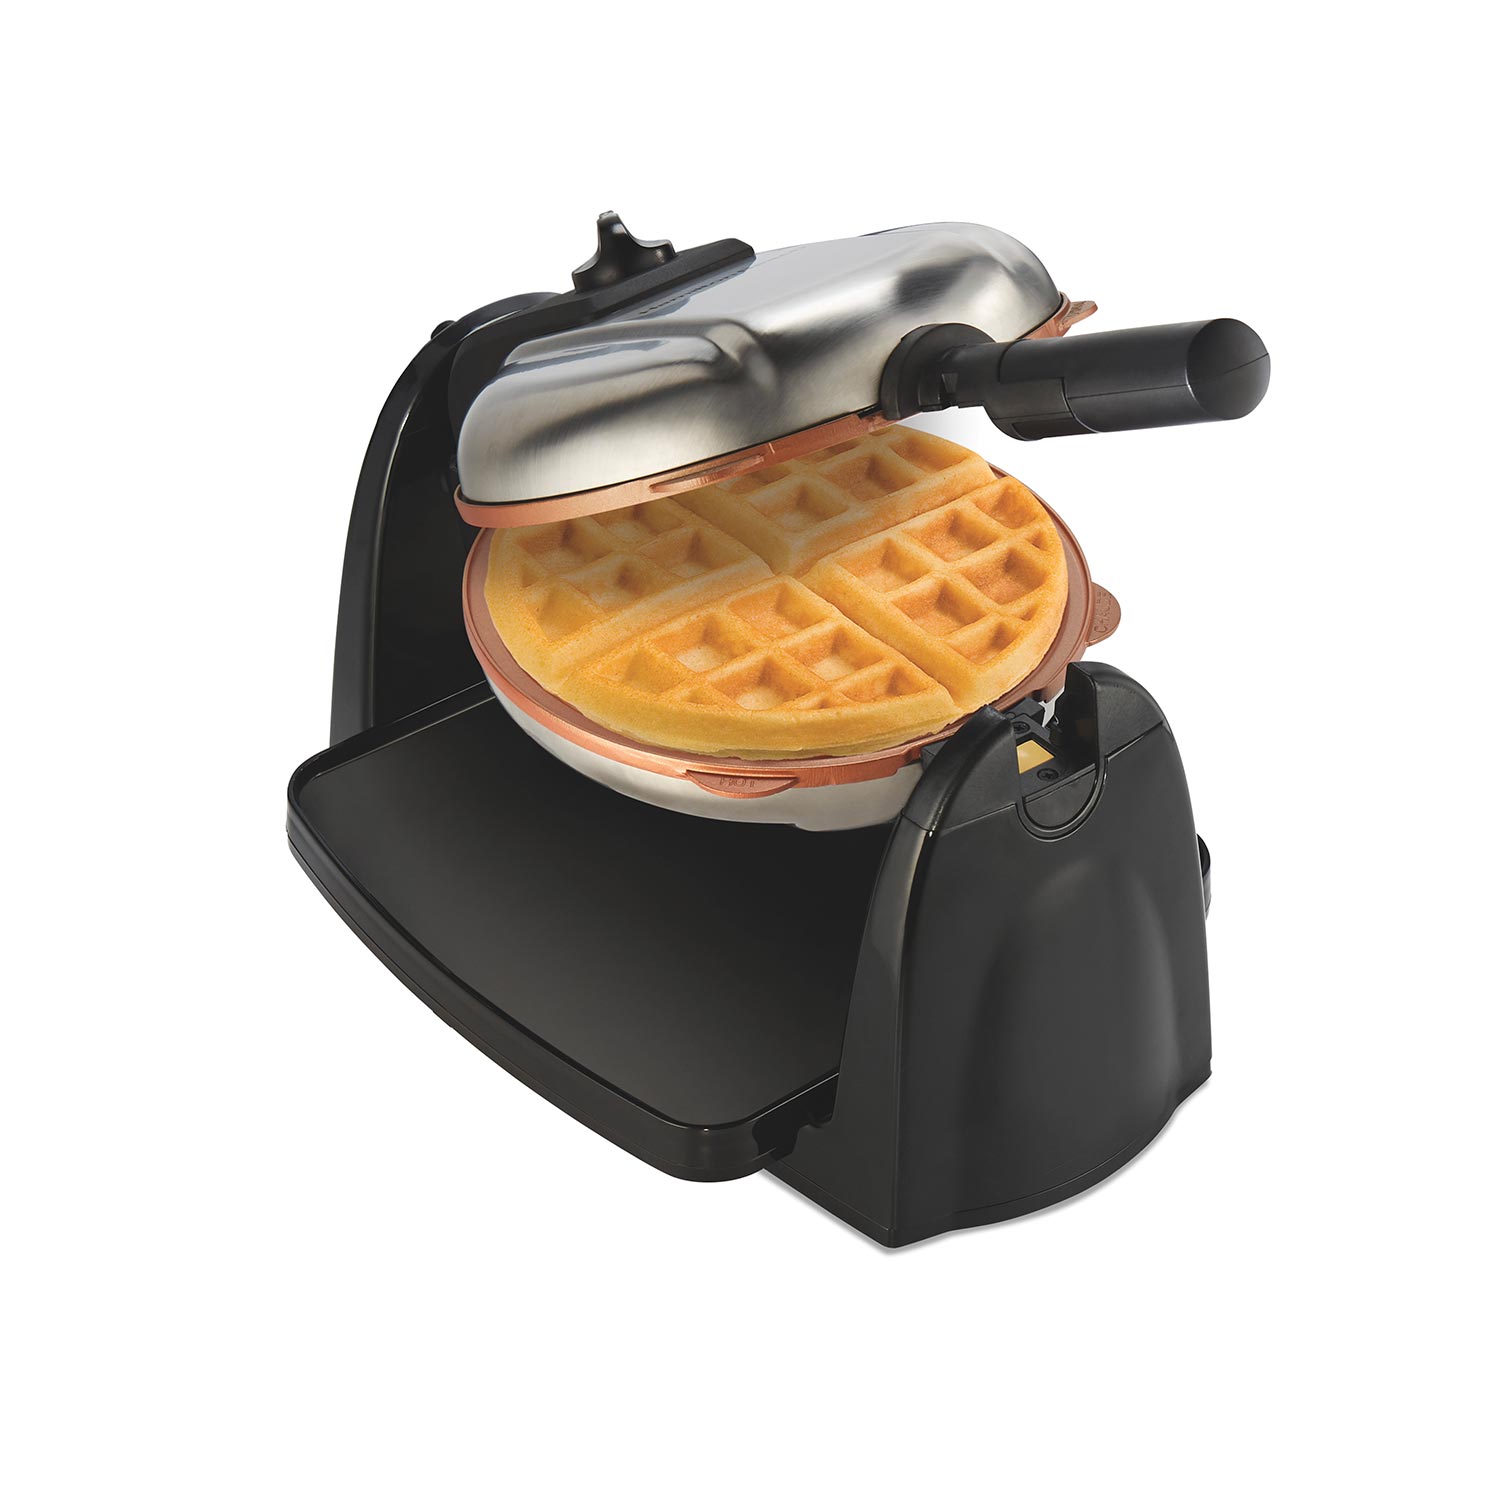 Durathon Removable-Grid Belgian Waffle Maker (26031)